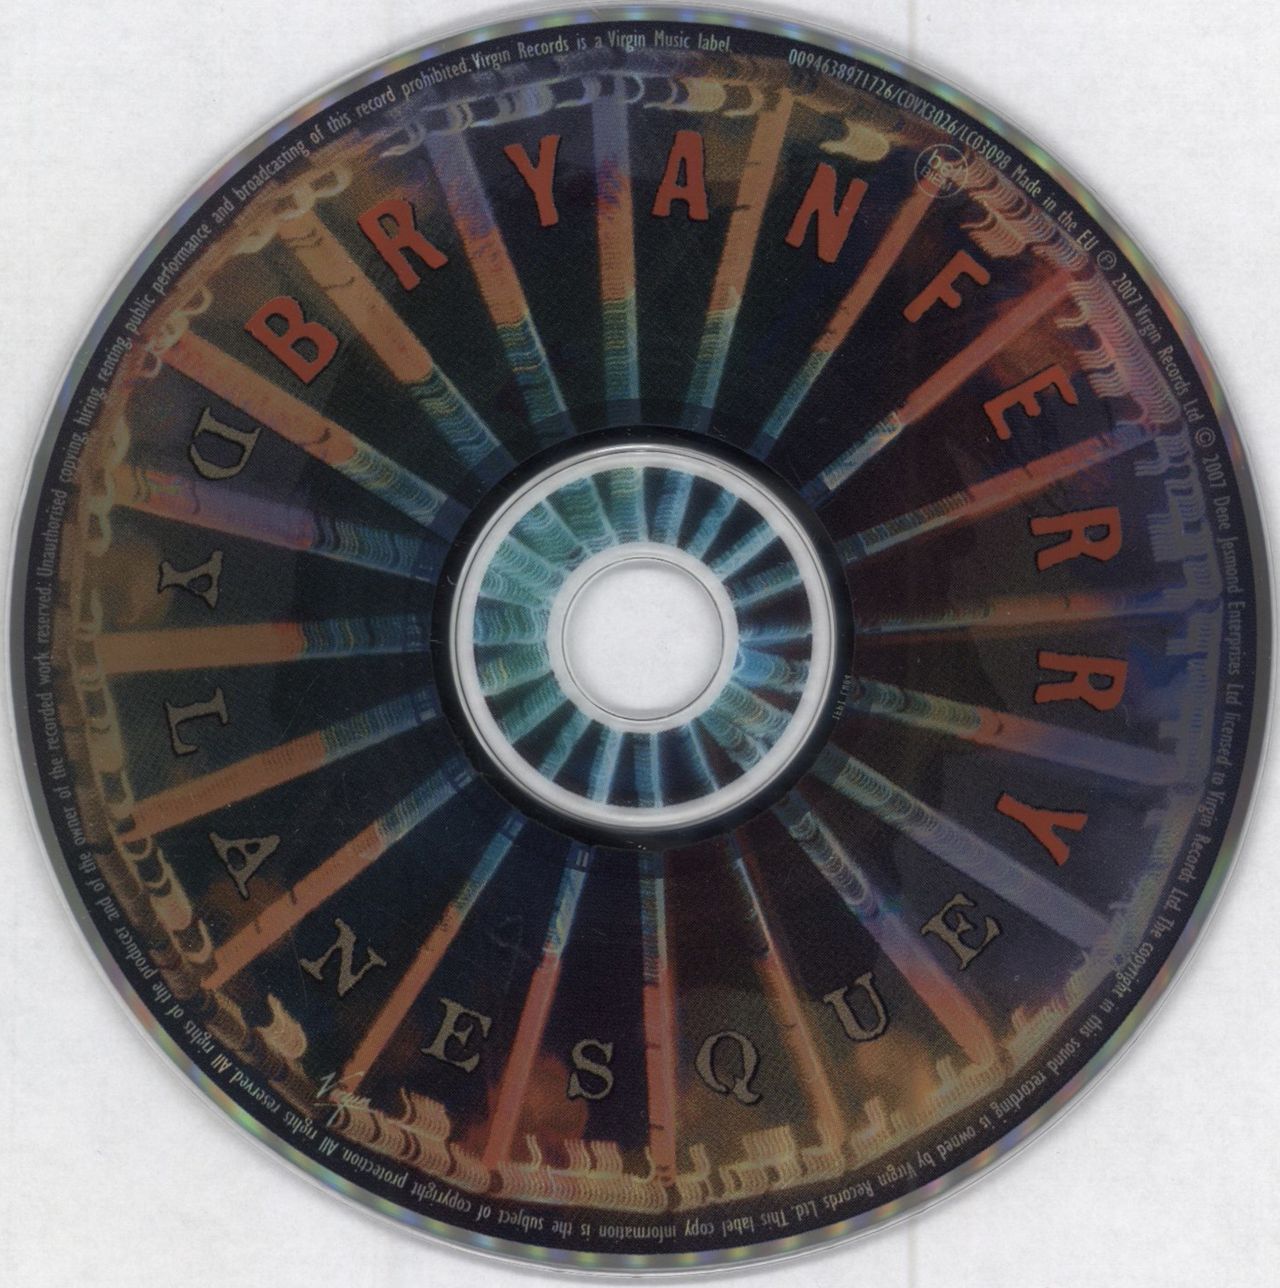 Bryan Ferry Dylanesque - Digipak UK Promo CD album (CDLP) FERCDDY785916